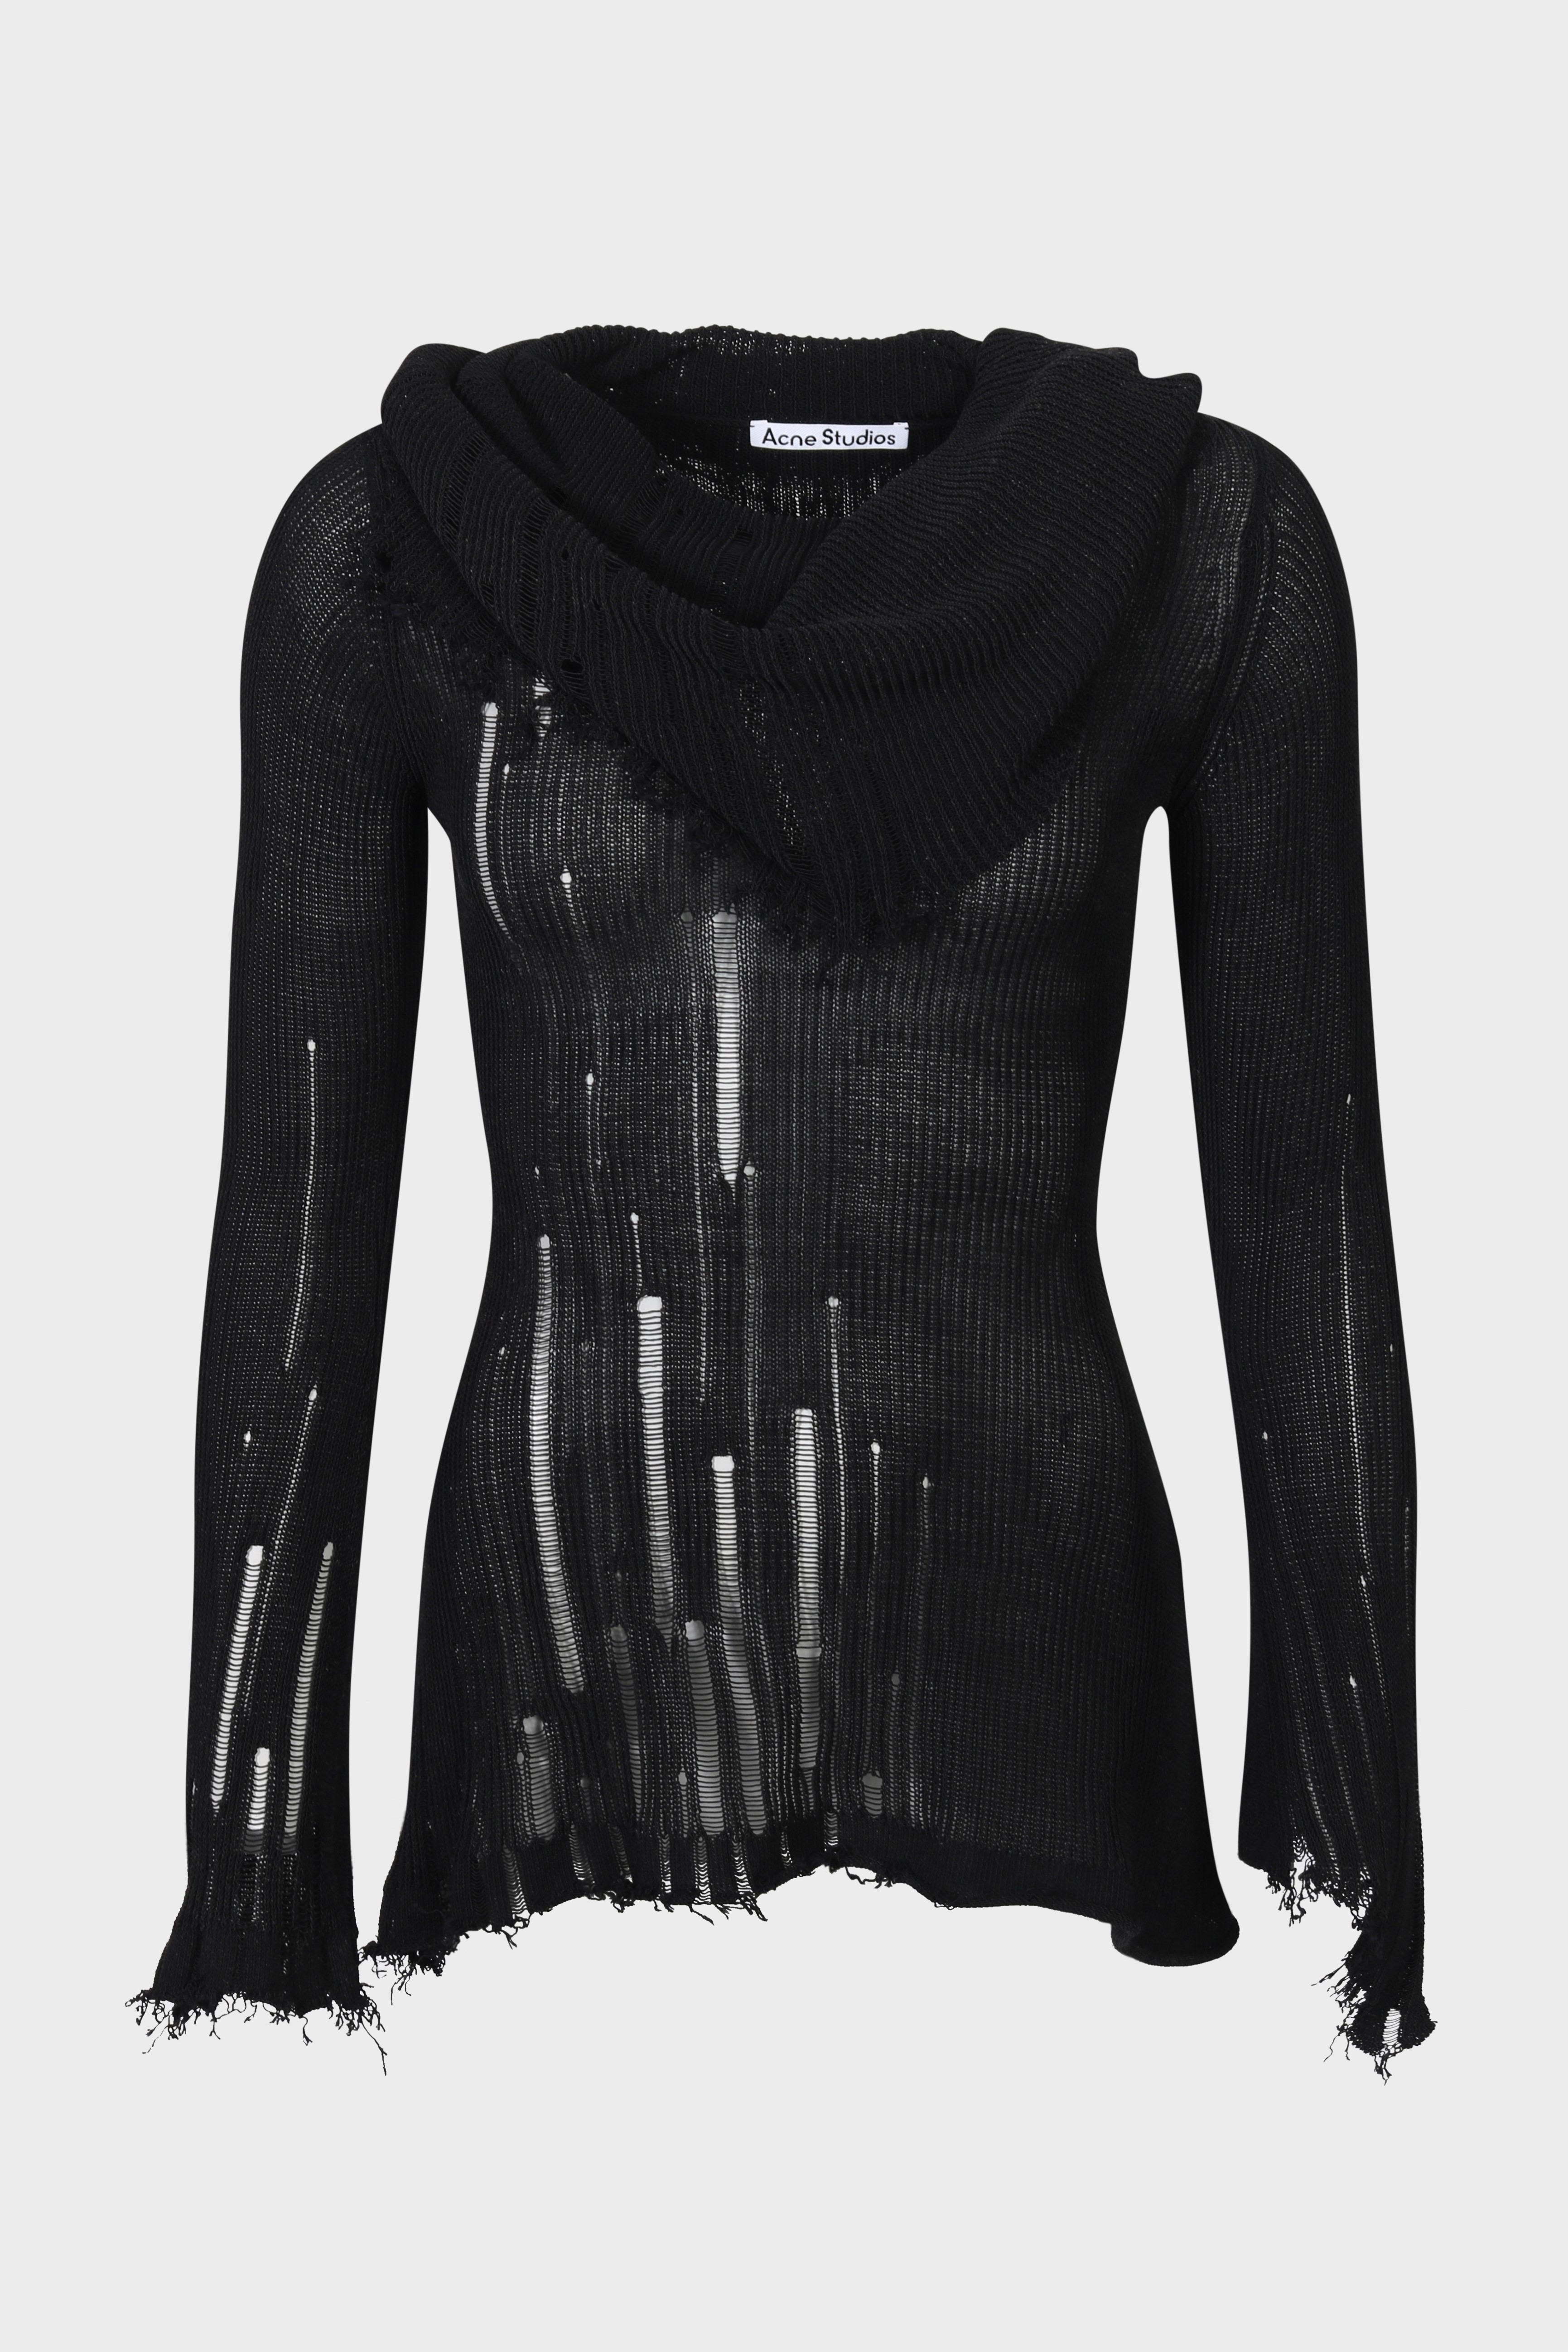 ACNE STUDIOS Neckline Knit Sweater in Black